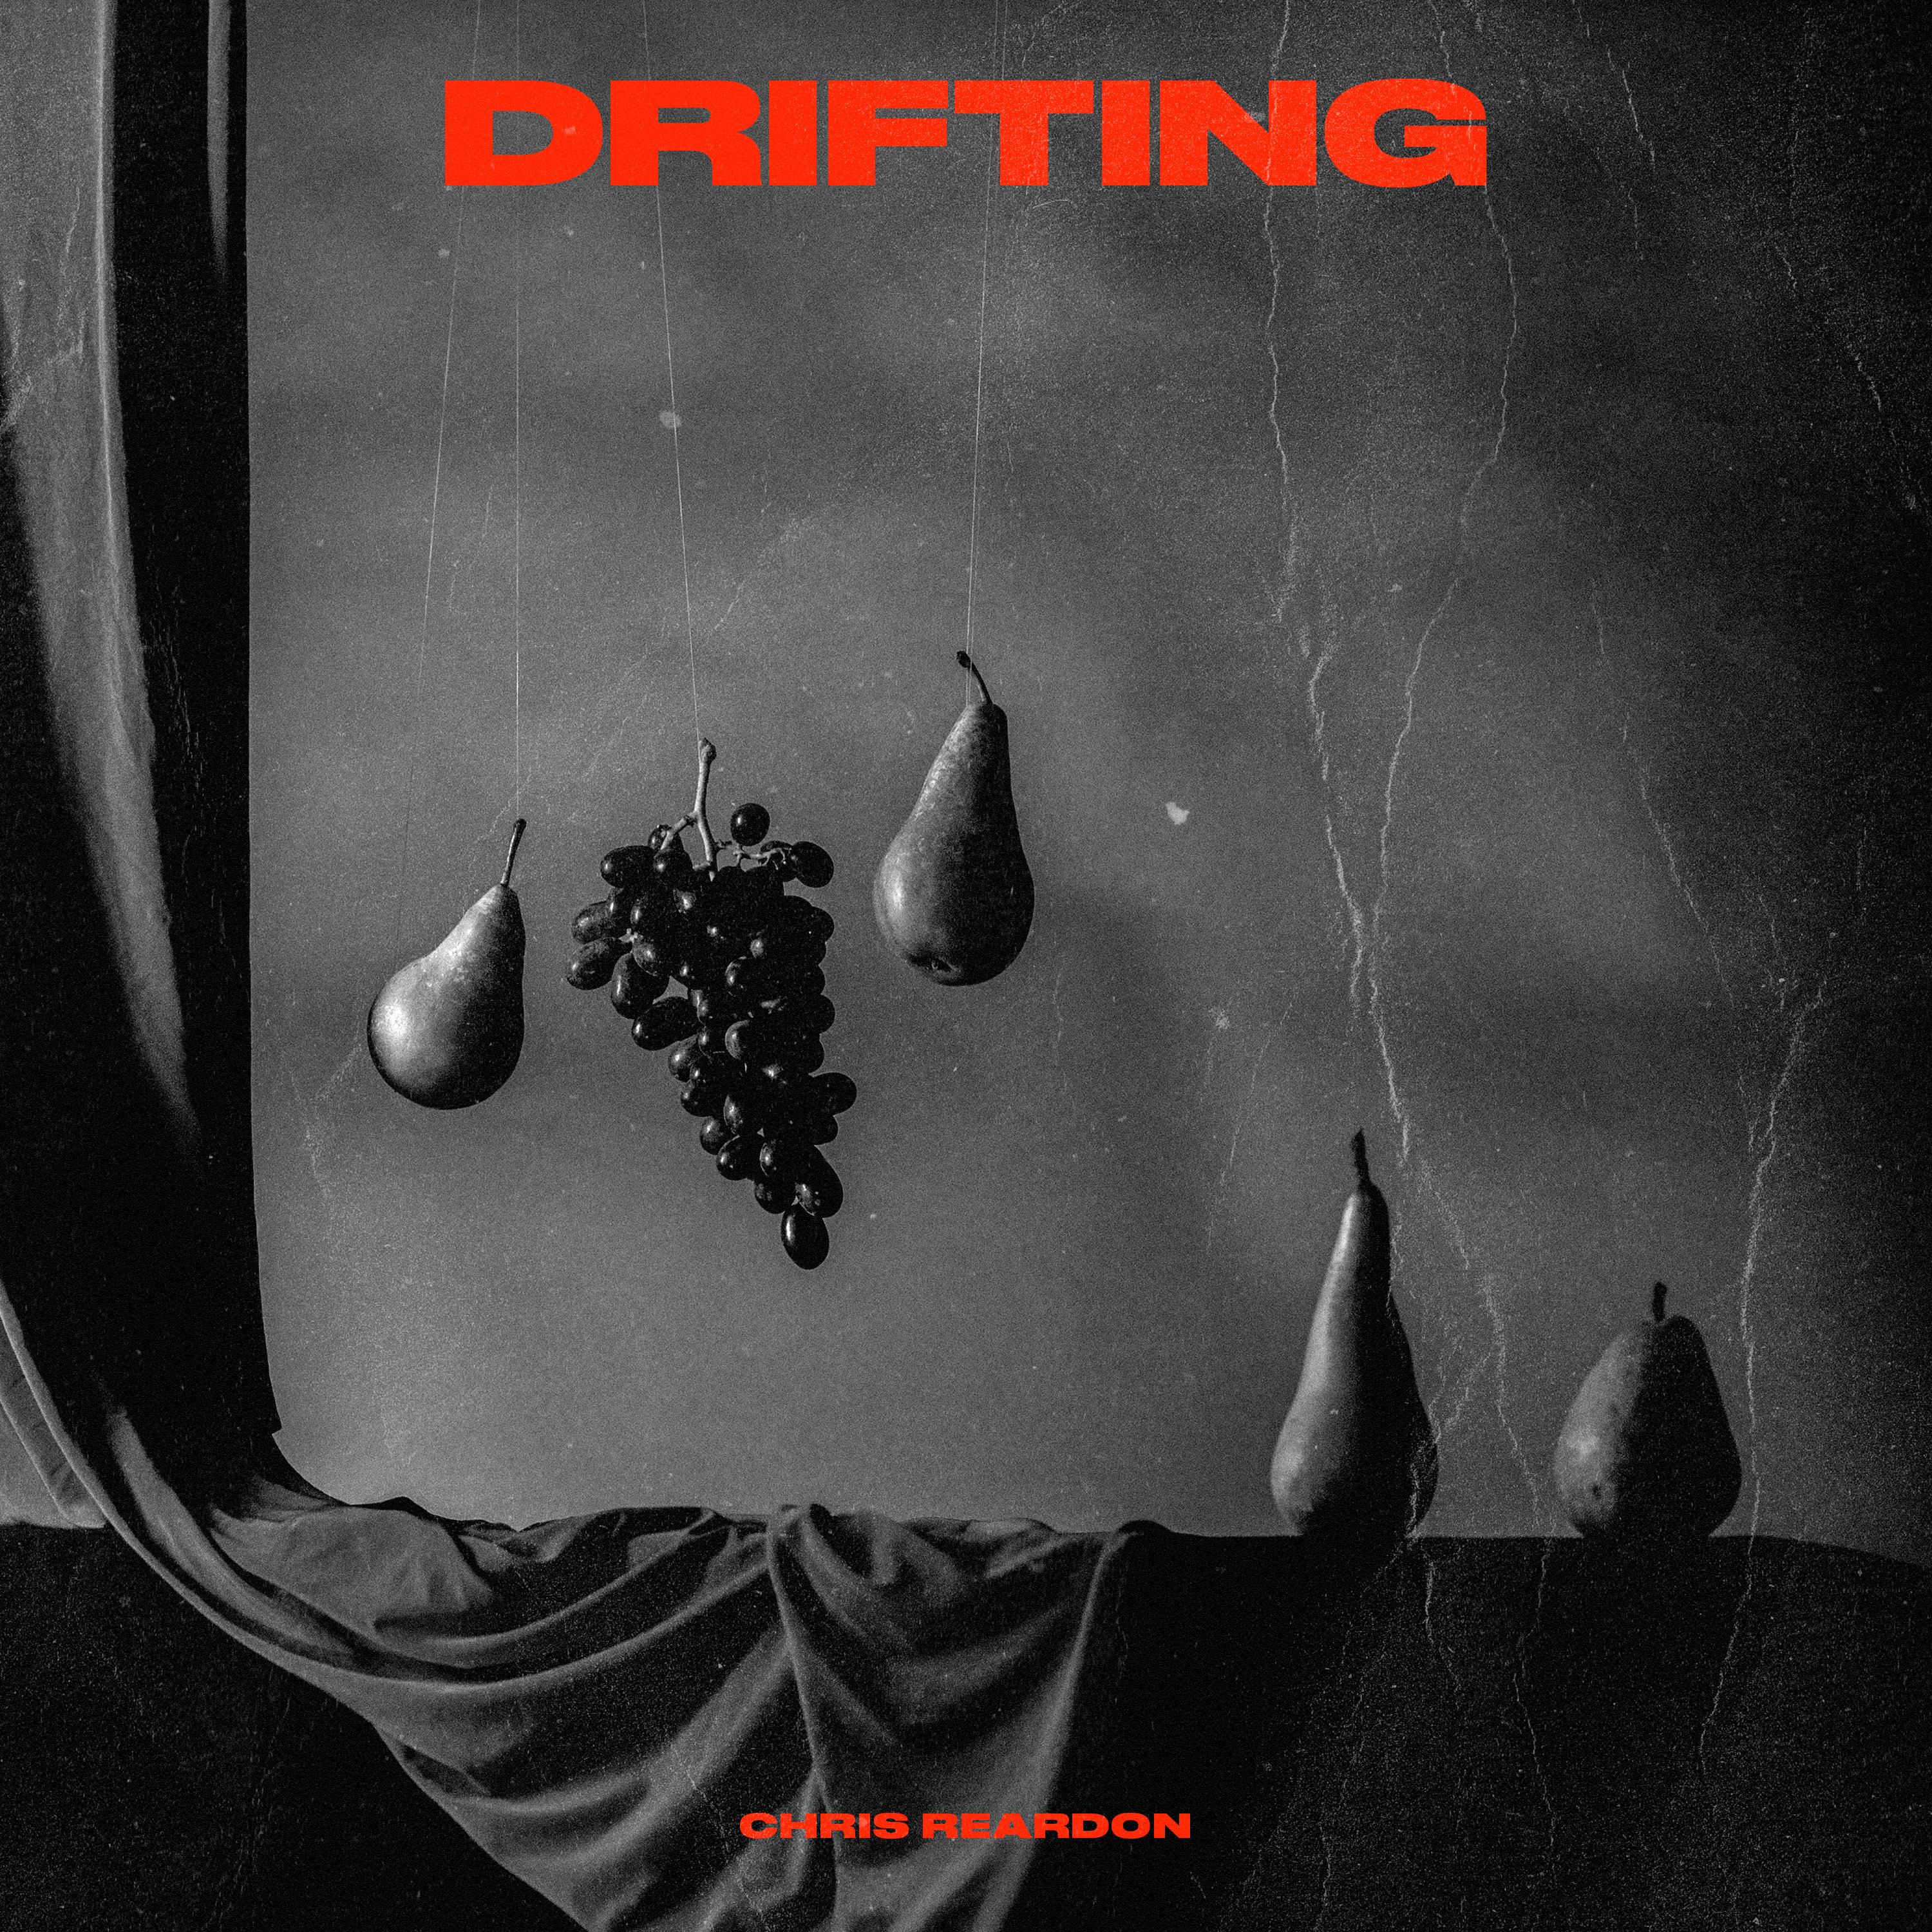 Chris Reardon’ Shares Brilliant Alternative Rock Single Titled “Drifting”